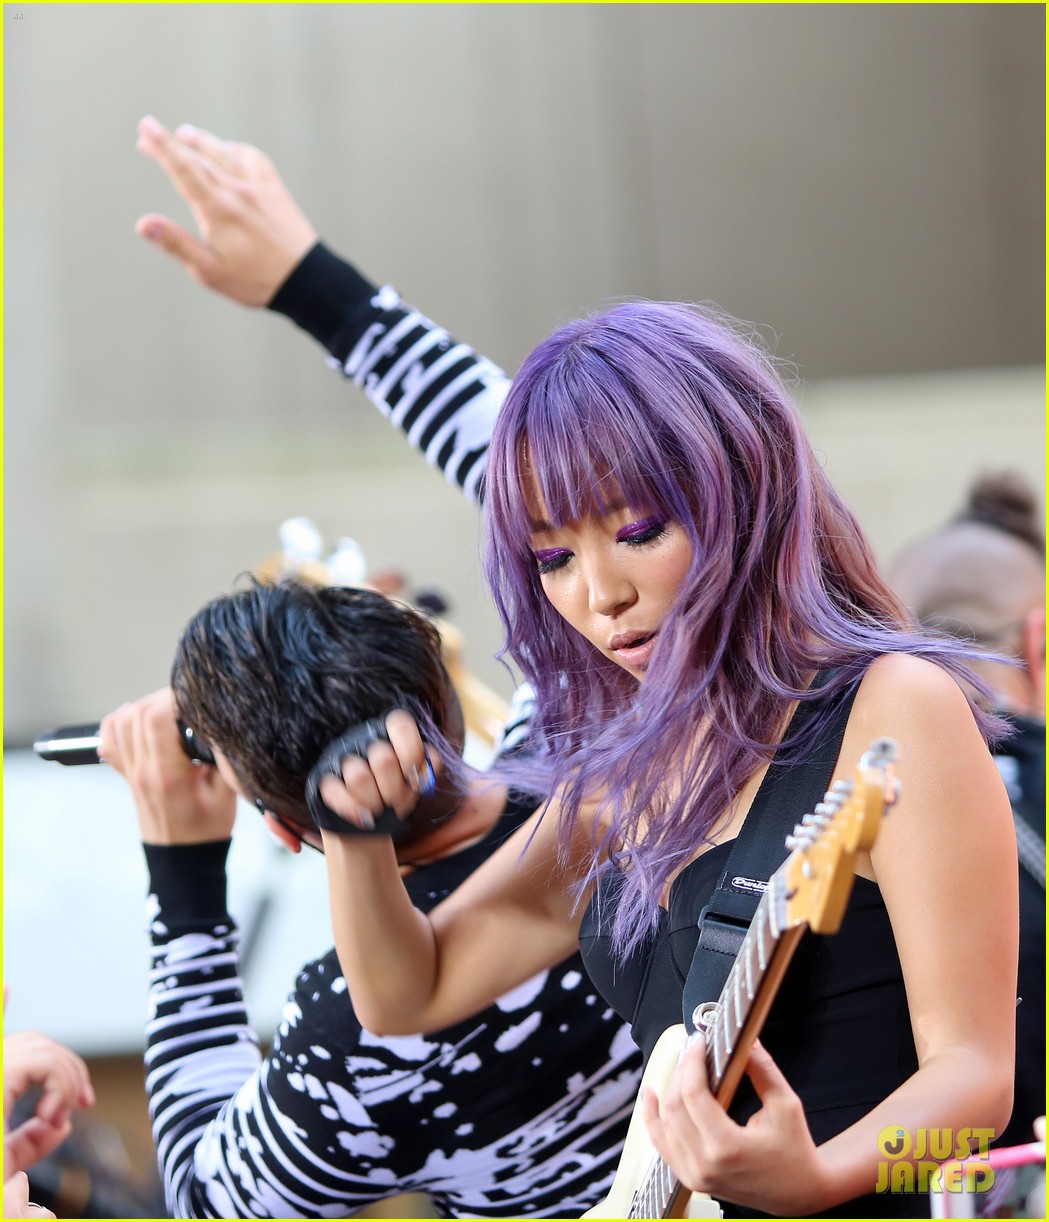 dnce jinjoo purple hair today show performance 02